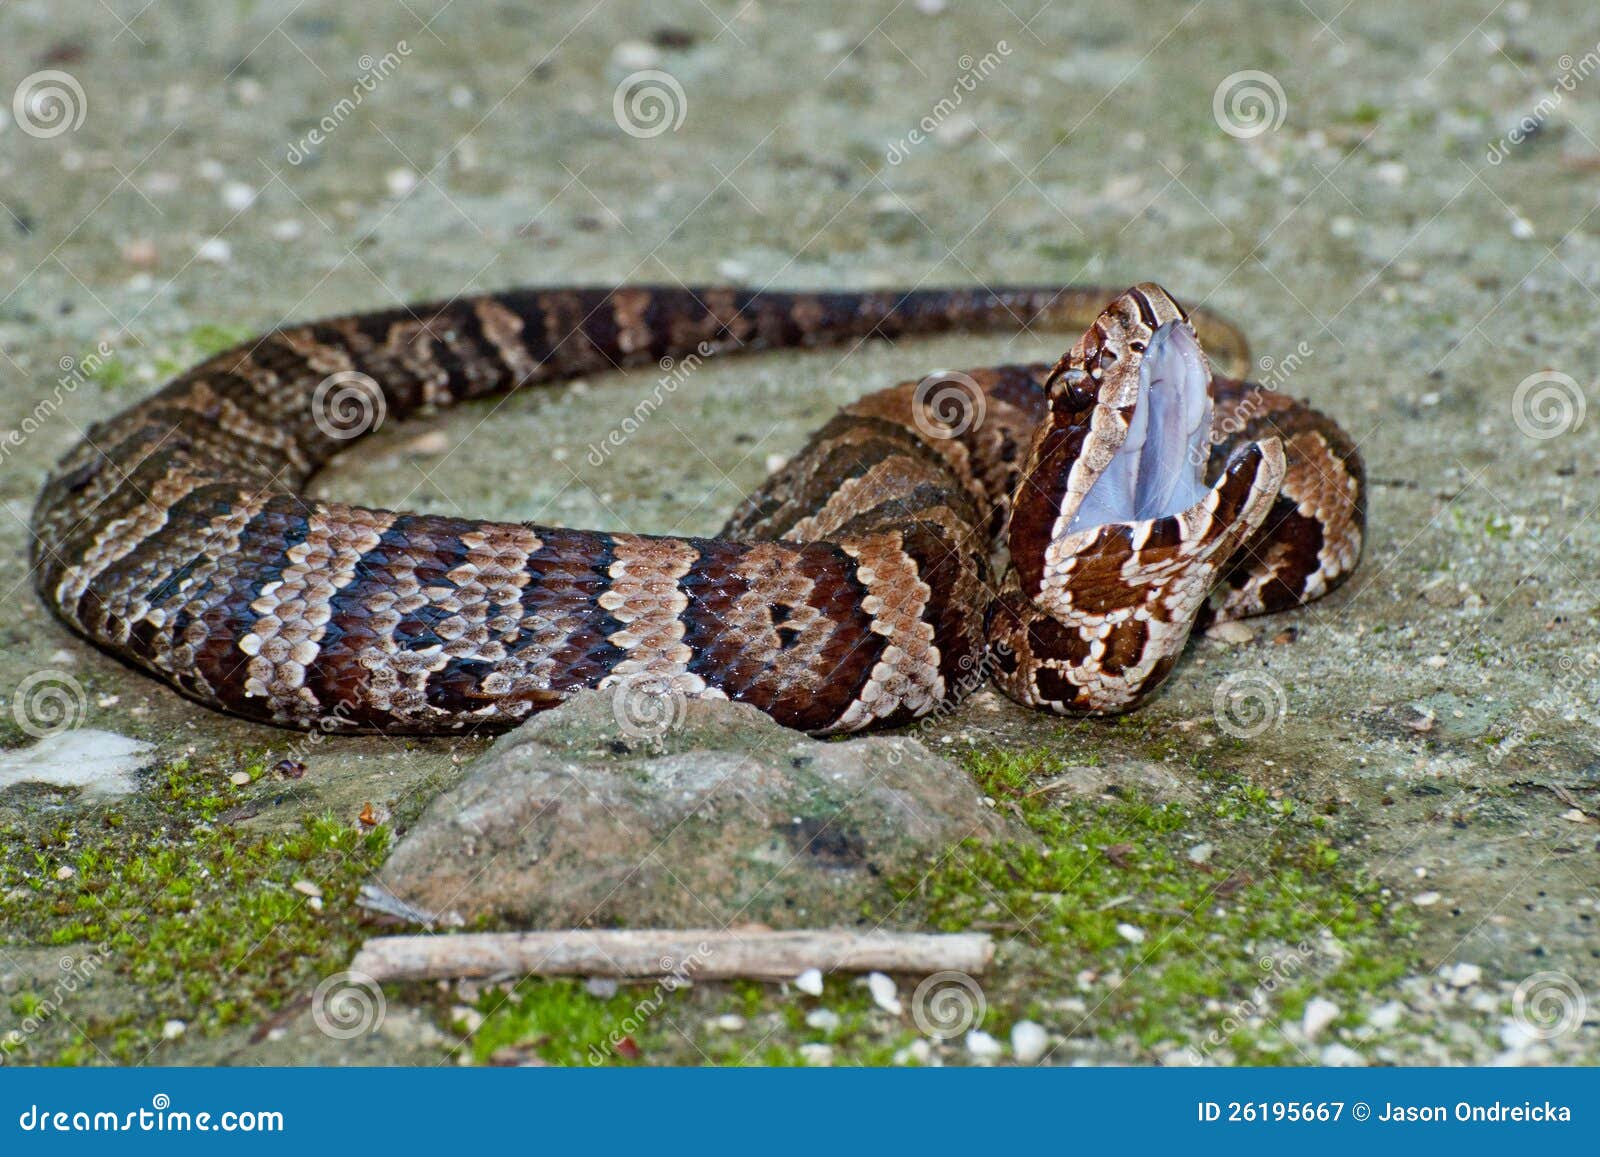 cottonmouth snake (agkistrodon piscivorus)